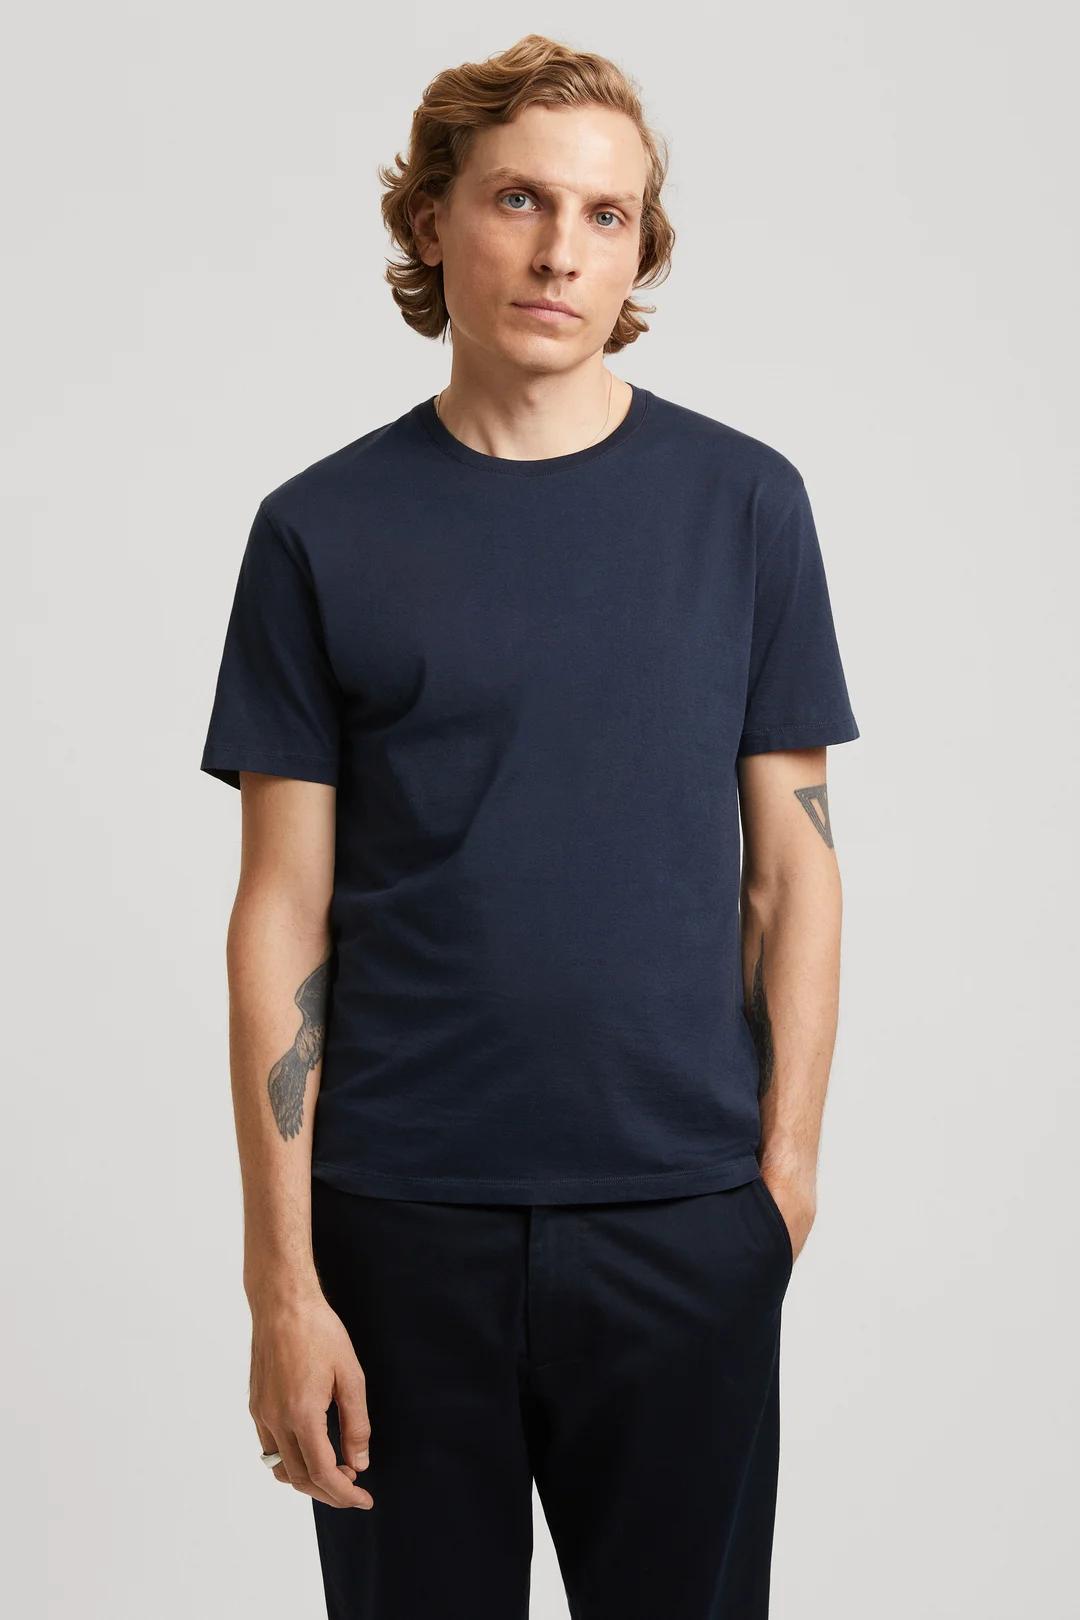 Navy Dark | - Cotton ASKET Crewneck Lightweight ELS T-Shirt